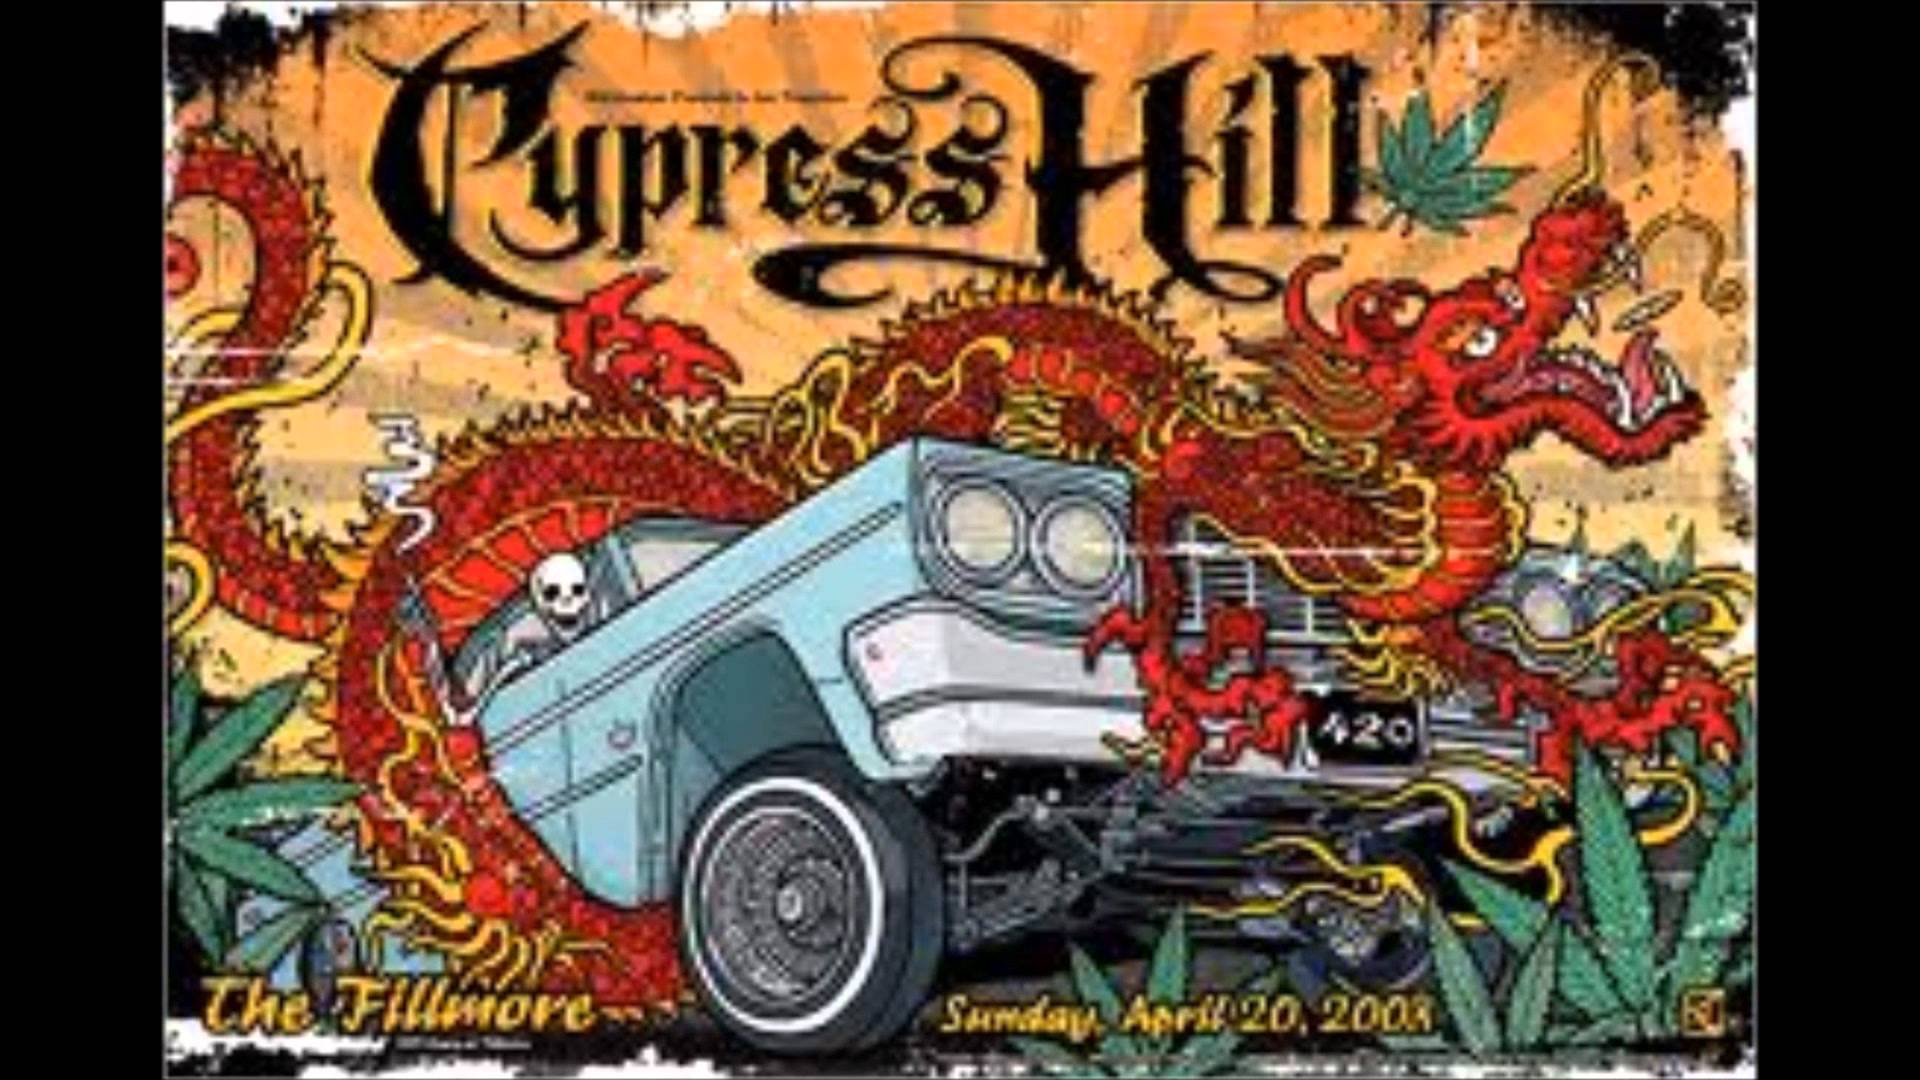 Free 1500 screensaver Cypress hill screensaver